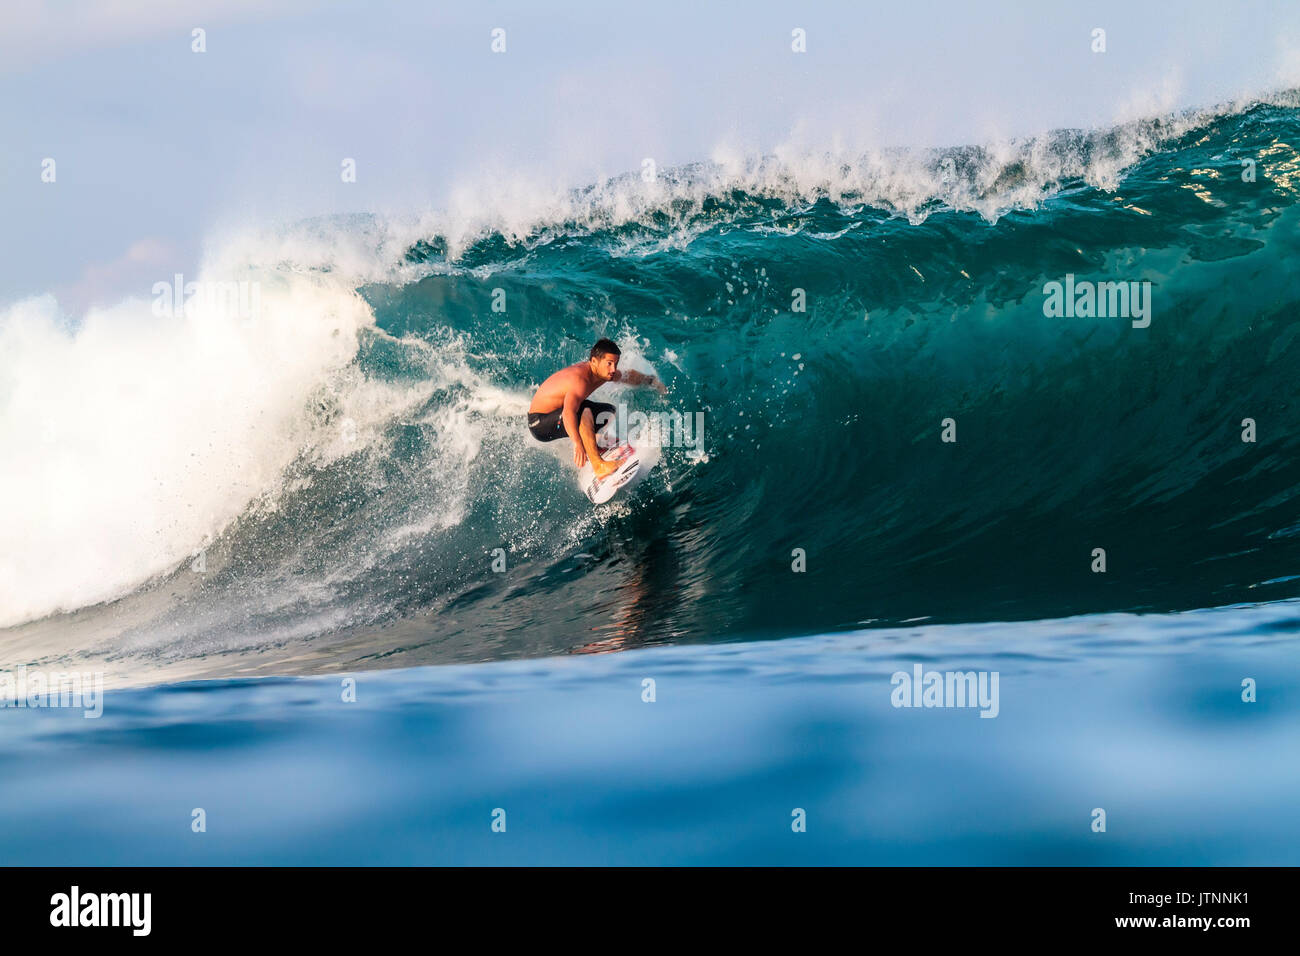 Surfer Surfen auf Wellen, Lakey Peak, zentrale Sumbawa, Indonesien Stockfoto